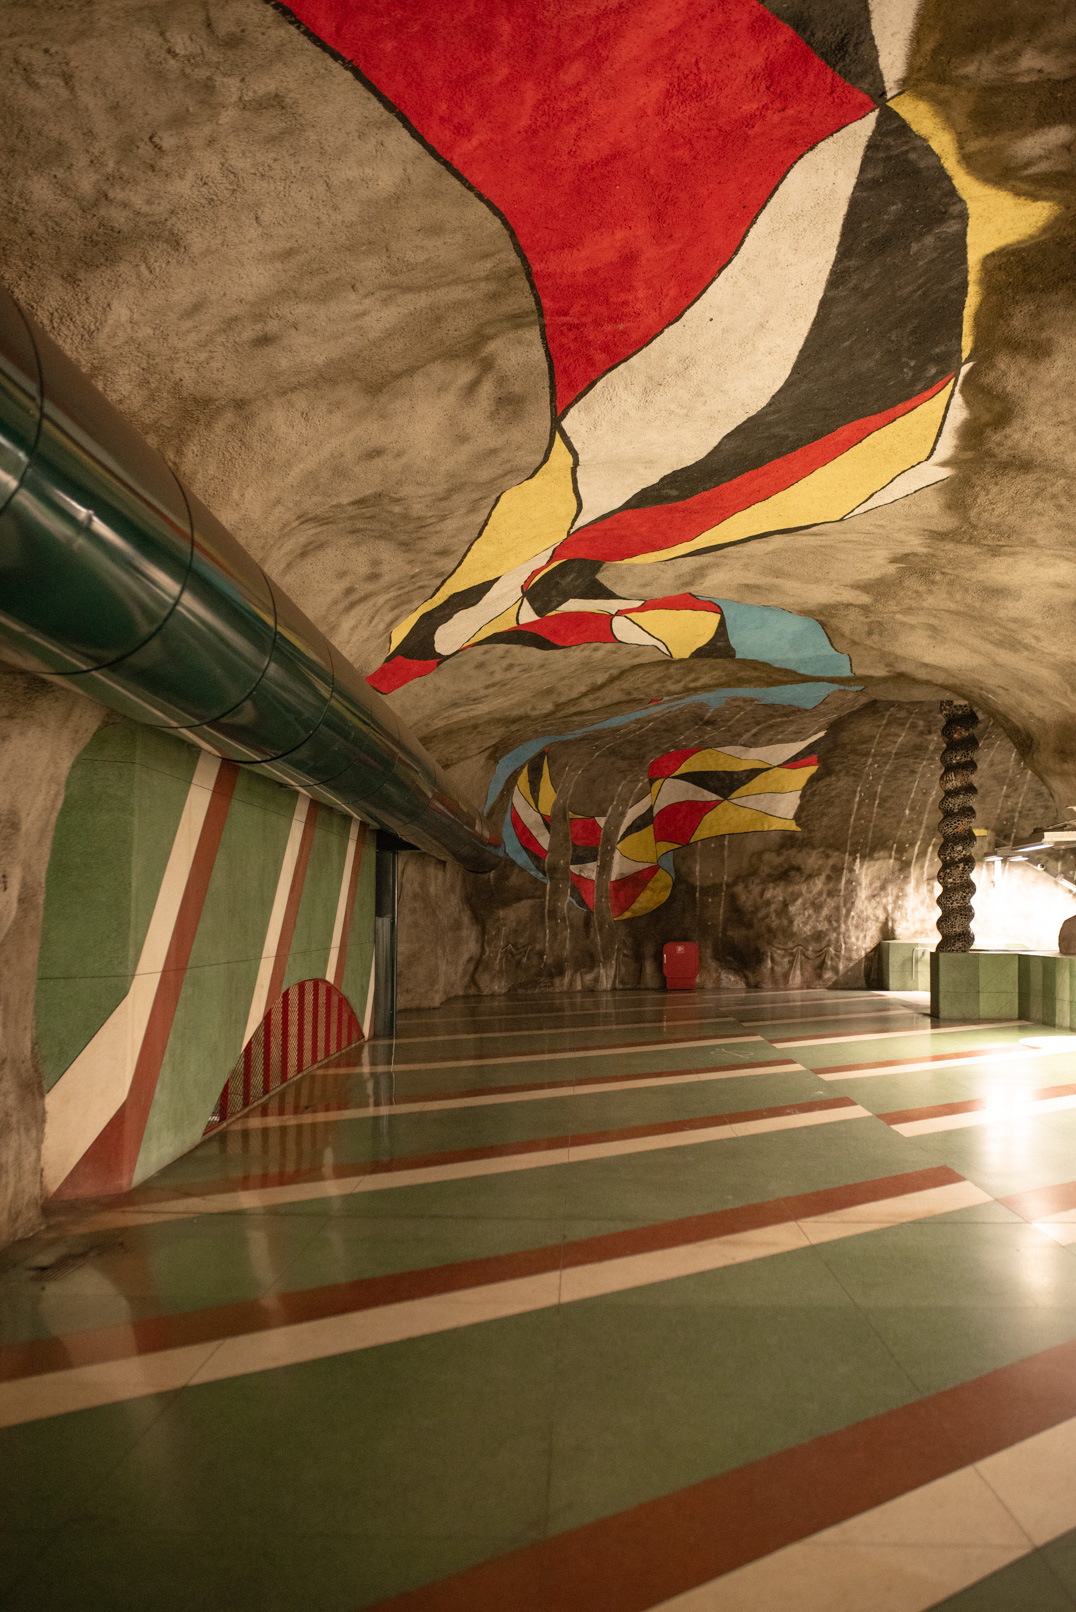 Stockholm's Metro System